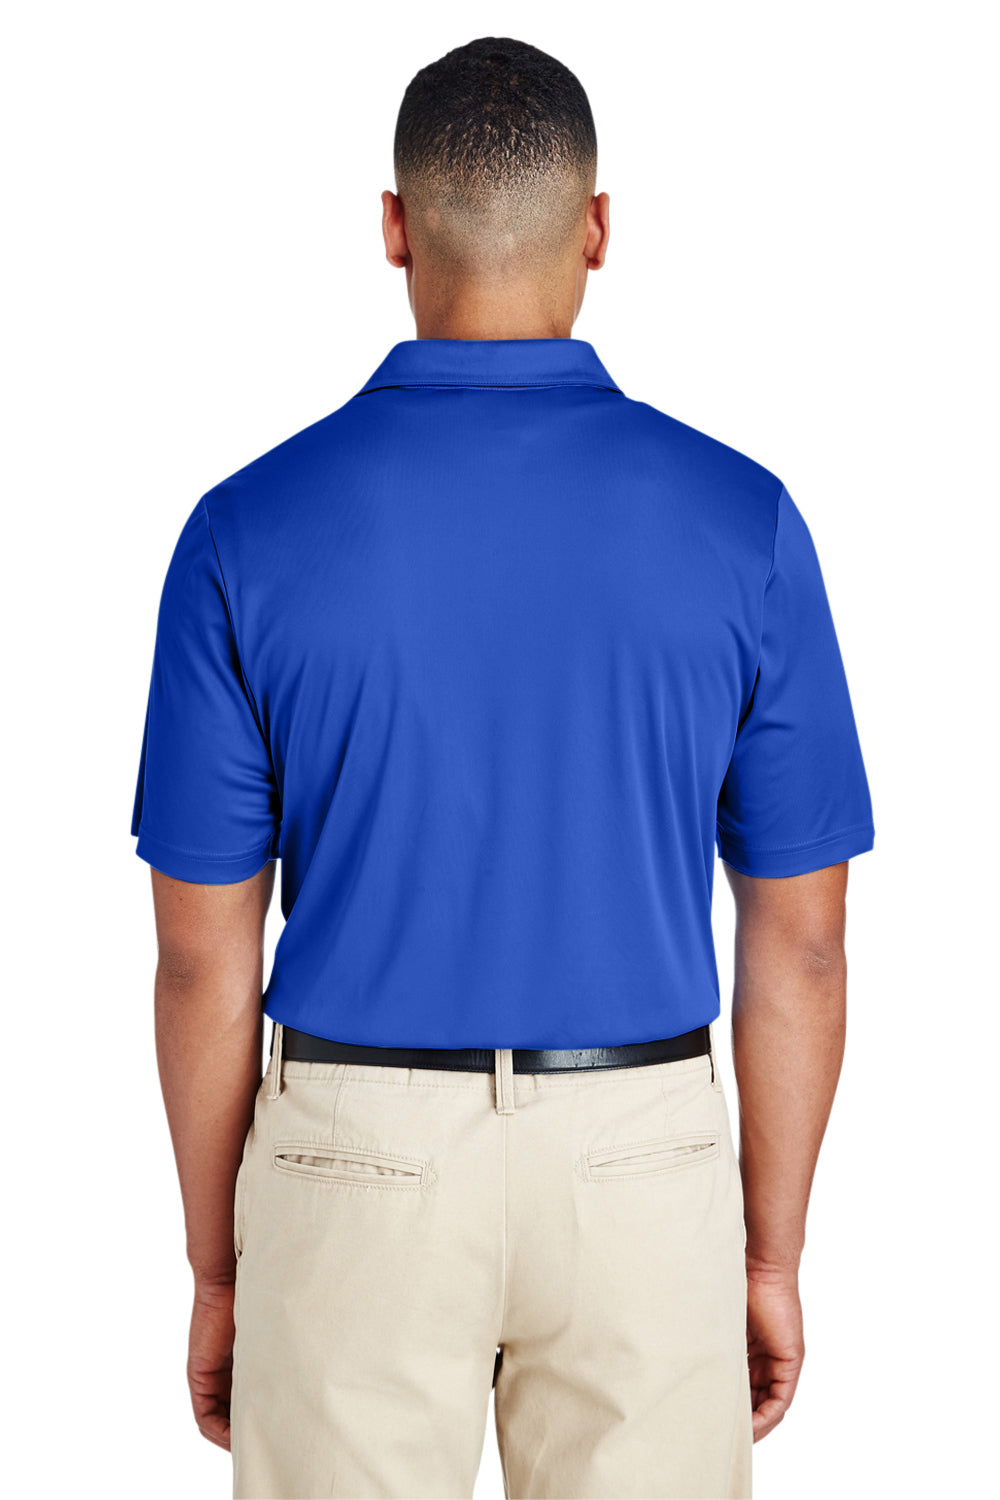 Team 365 TT51 Mens Zone Performance Moisture Wicking Short Sleeve Polo Shirt Royal Blue Back